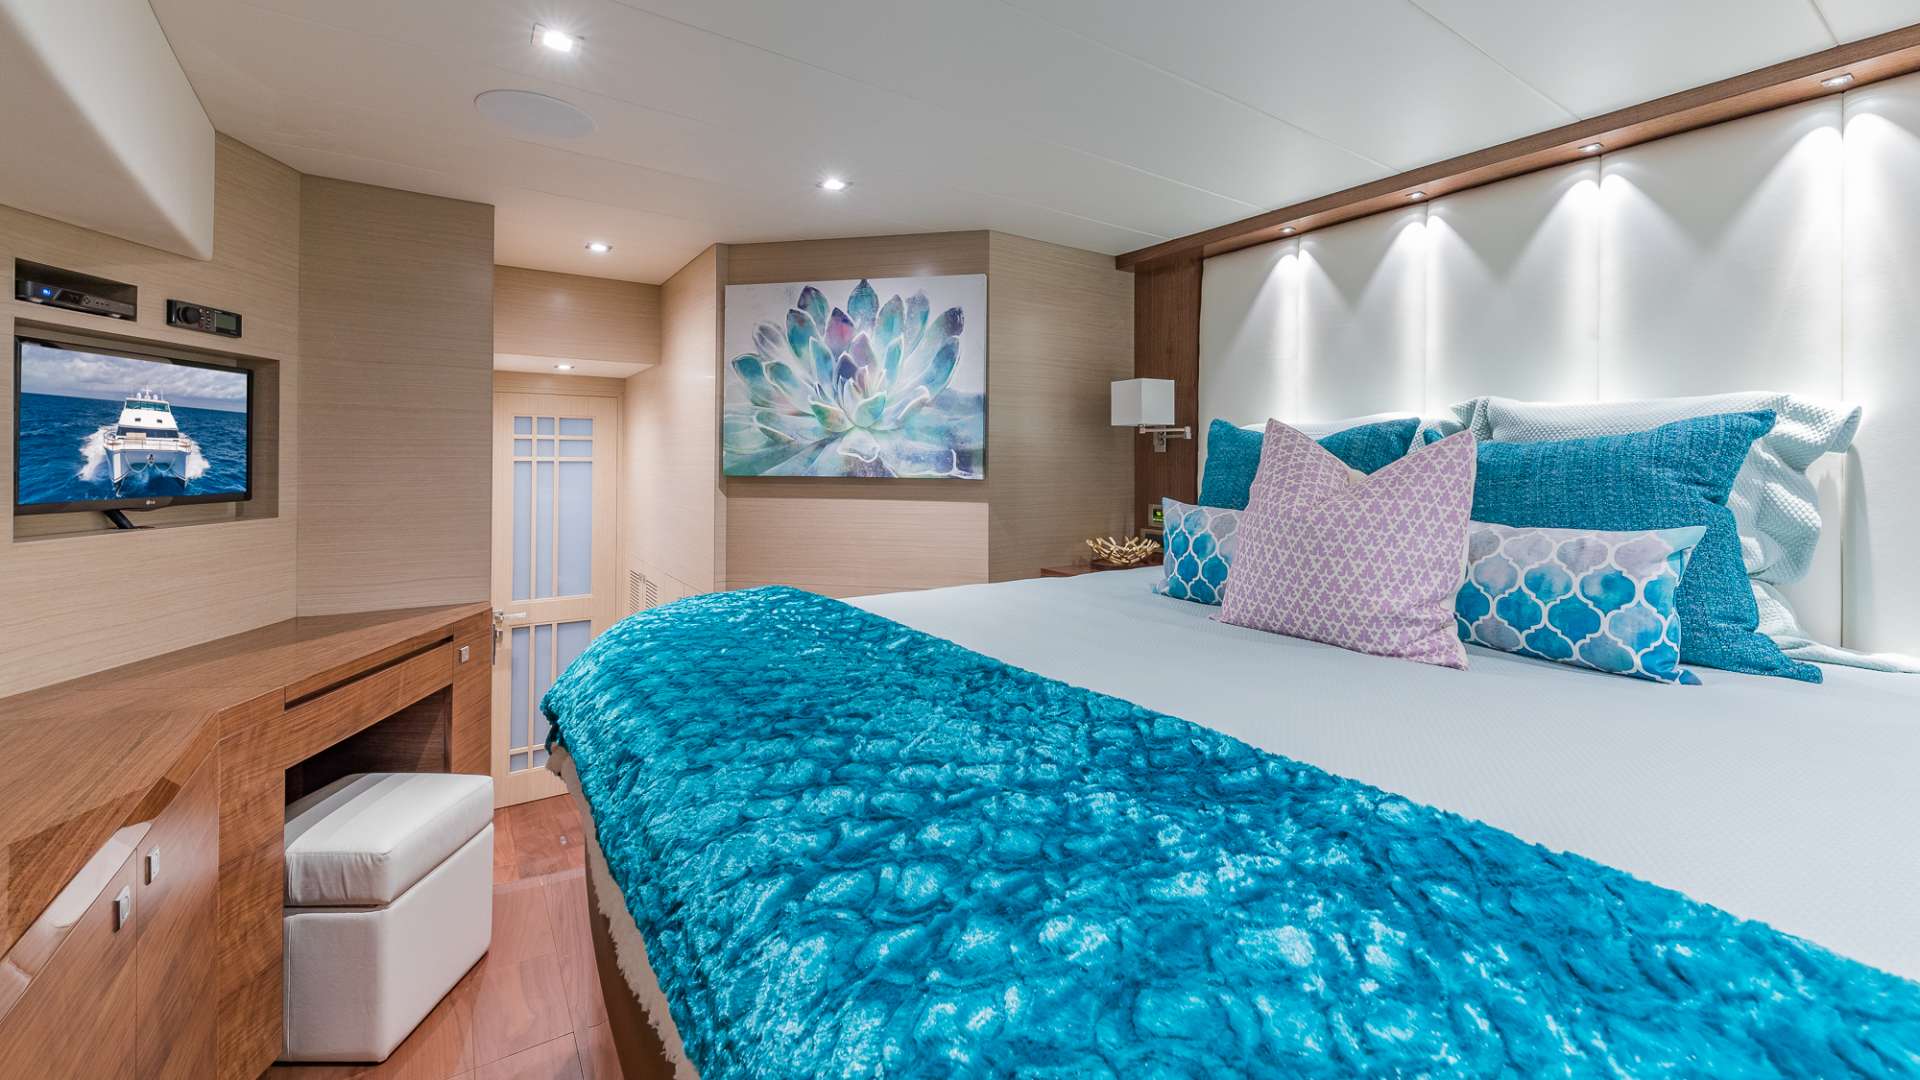 Motor Yacht 'MUCHO GUSTO' VIP King Suite, 6 PAX, 2 Crew, 65.00 Ft, 19.00 Meters, Built 2019, Horizon